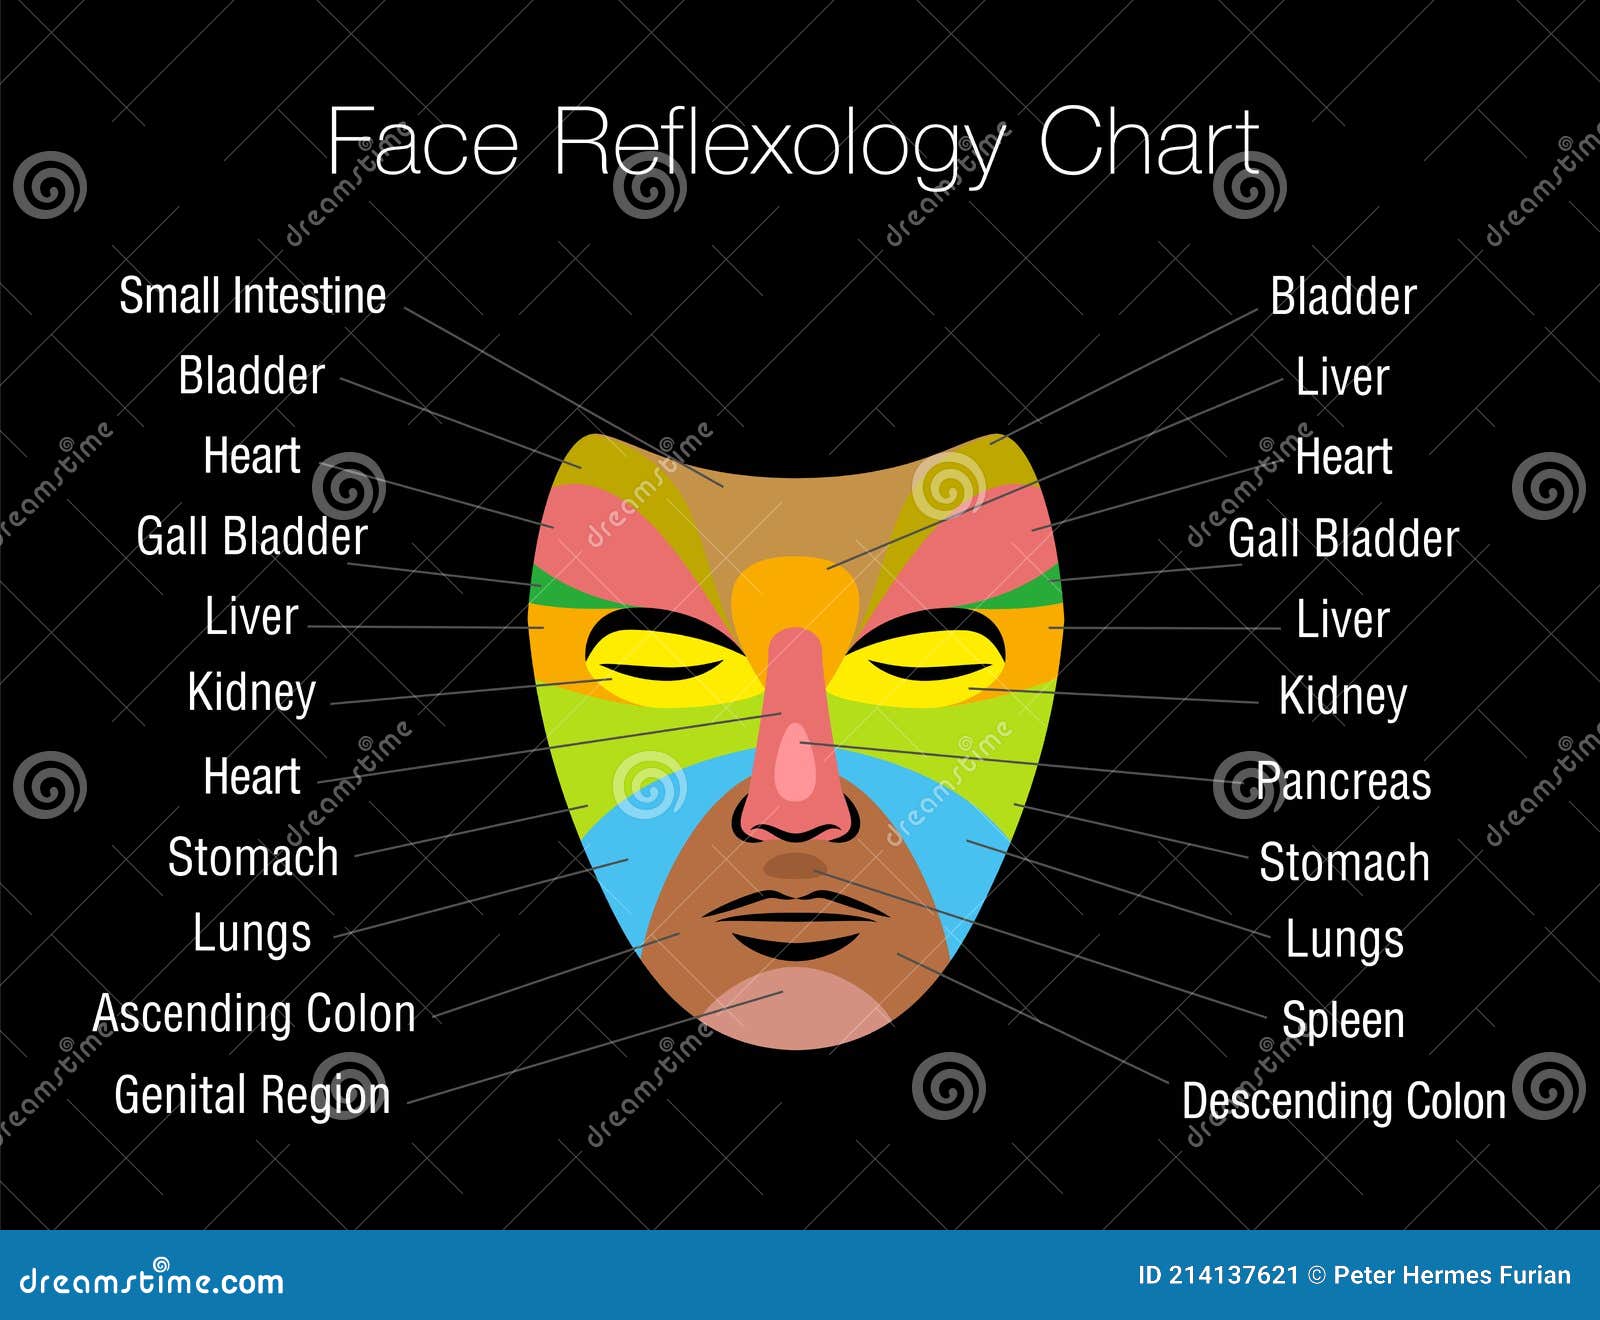 face reflexology chart internal organs mapping areas body parts black